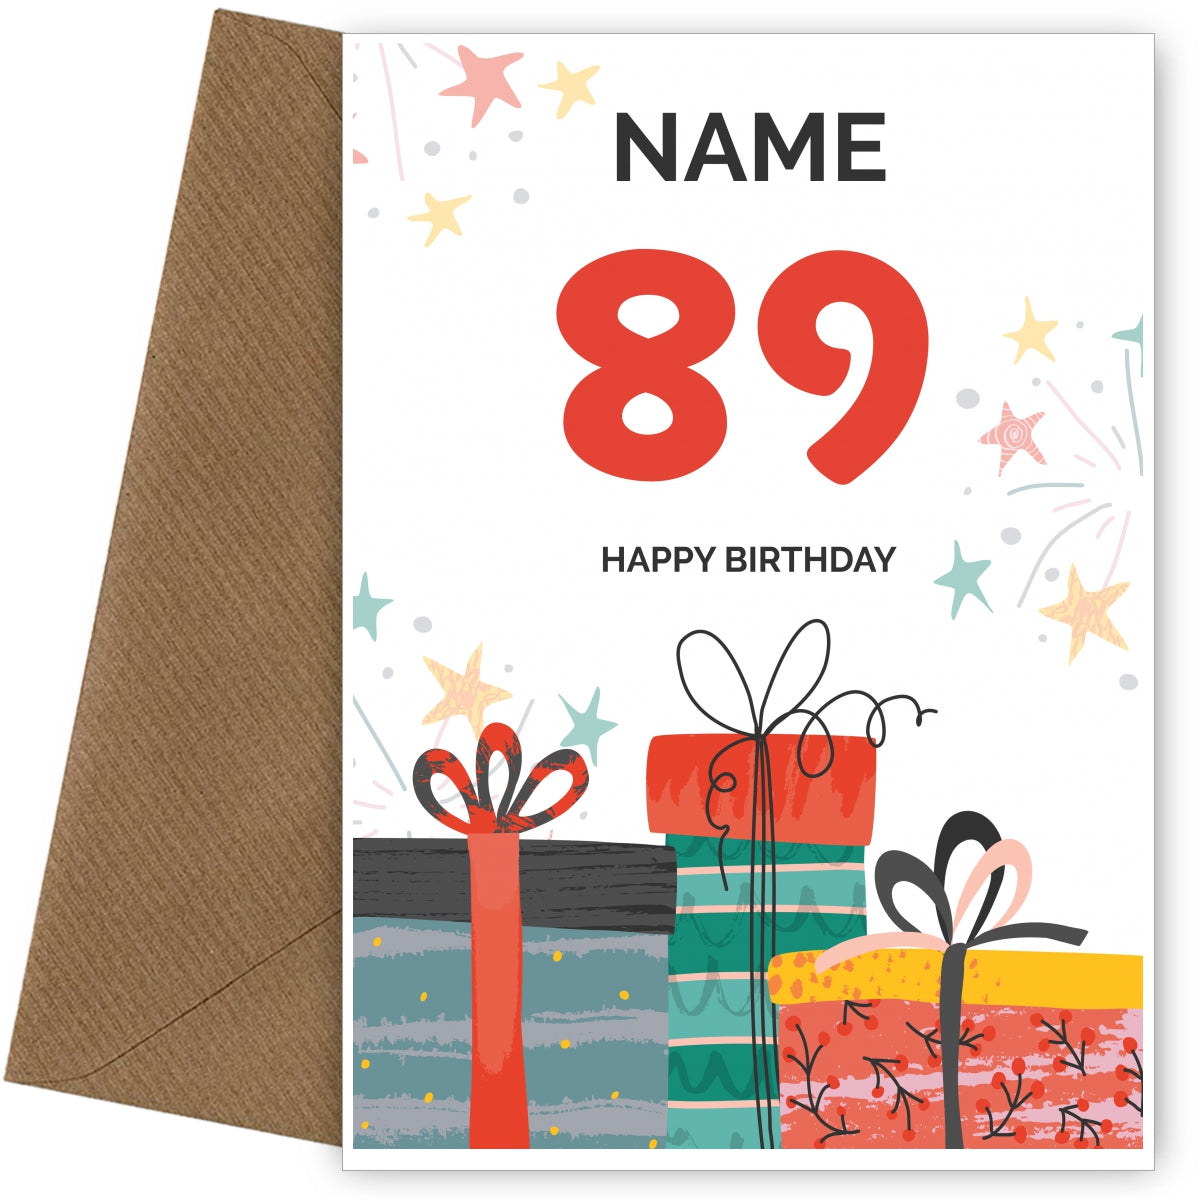 Happy 89th Birthday Card - Fun Presents Design